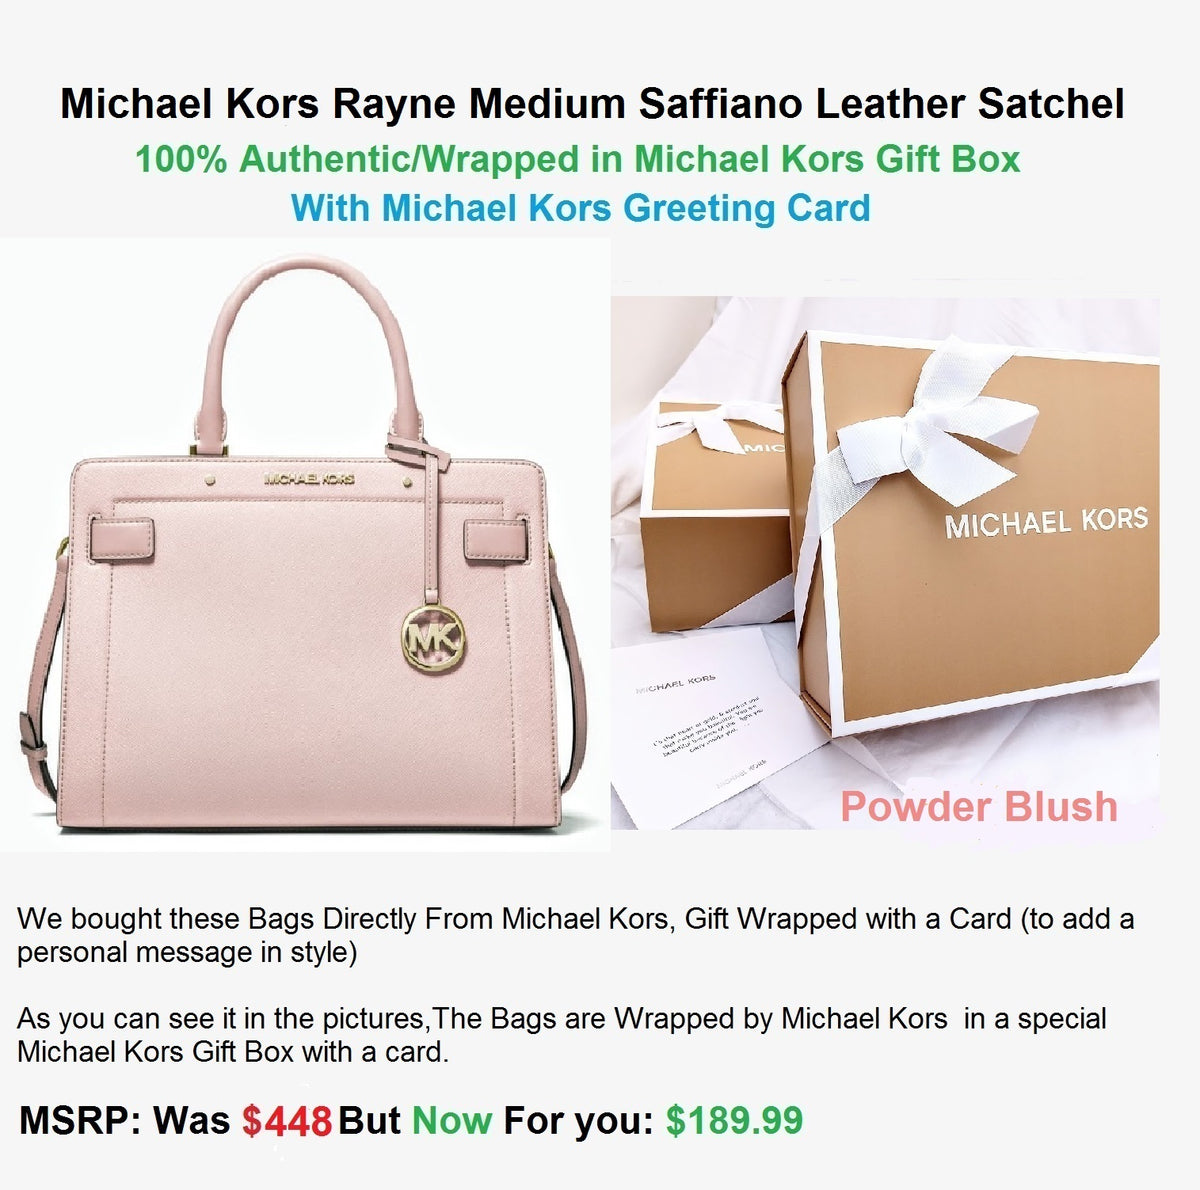 Michael Kors Rayne 35S0Gu9S2L Medium Saffiano Leather Satchel